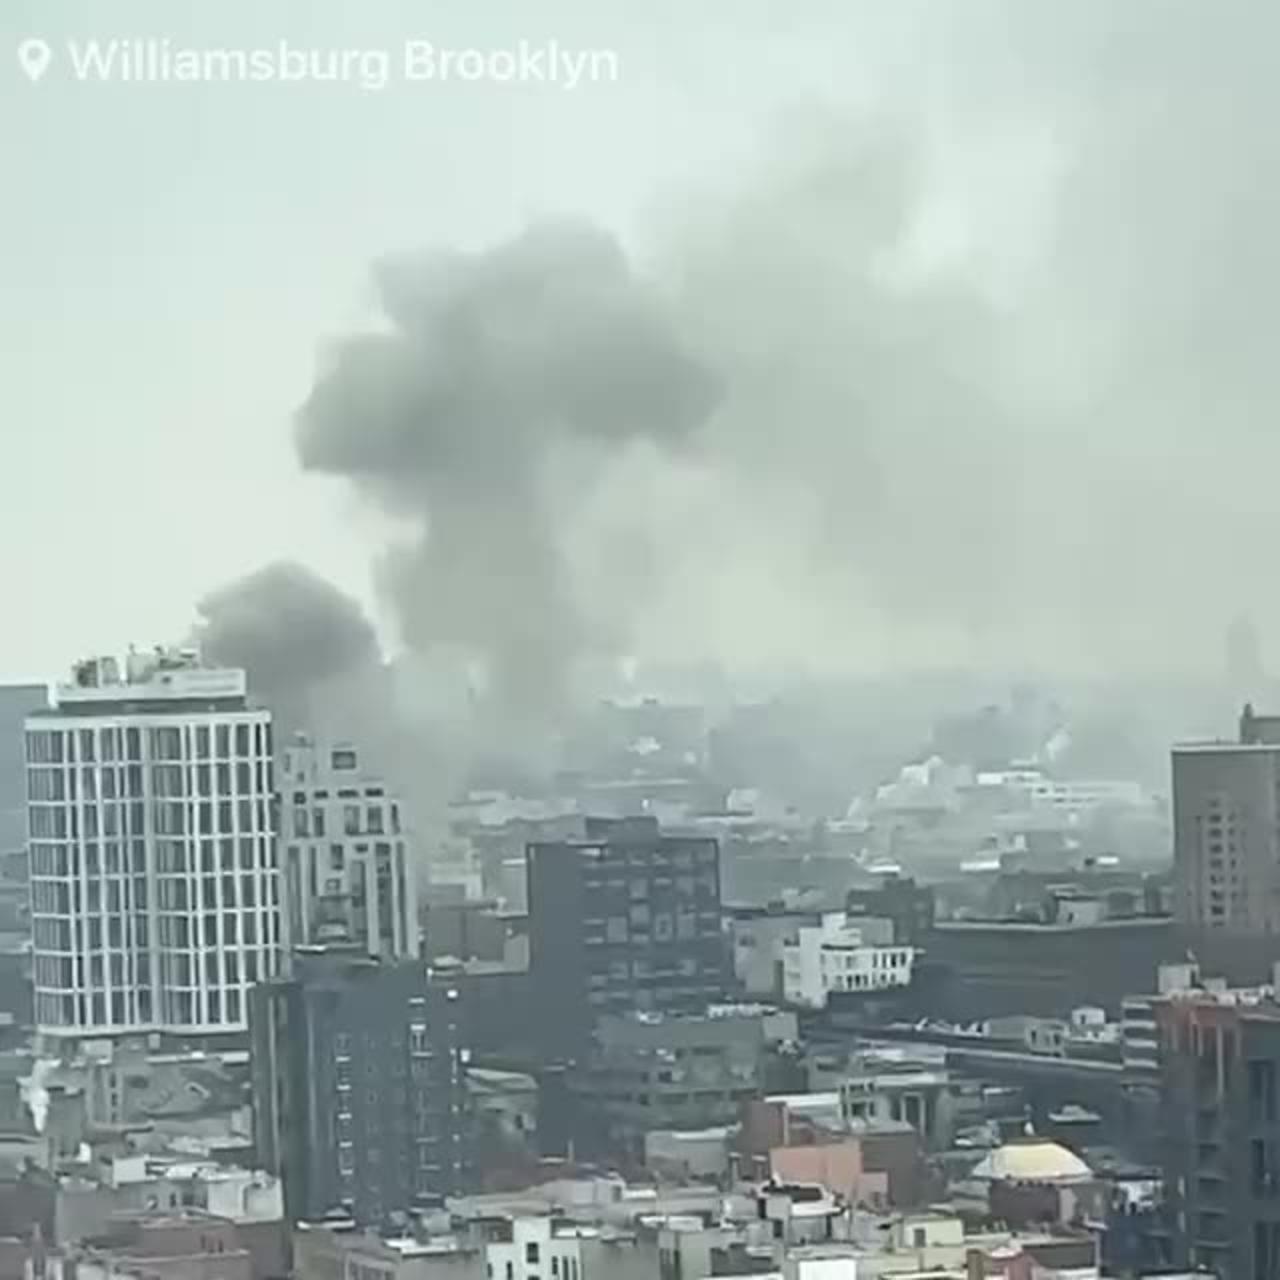 A Massive fire breaks out a Brooklyn Lumber Storage Warehouse